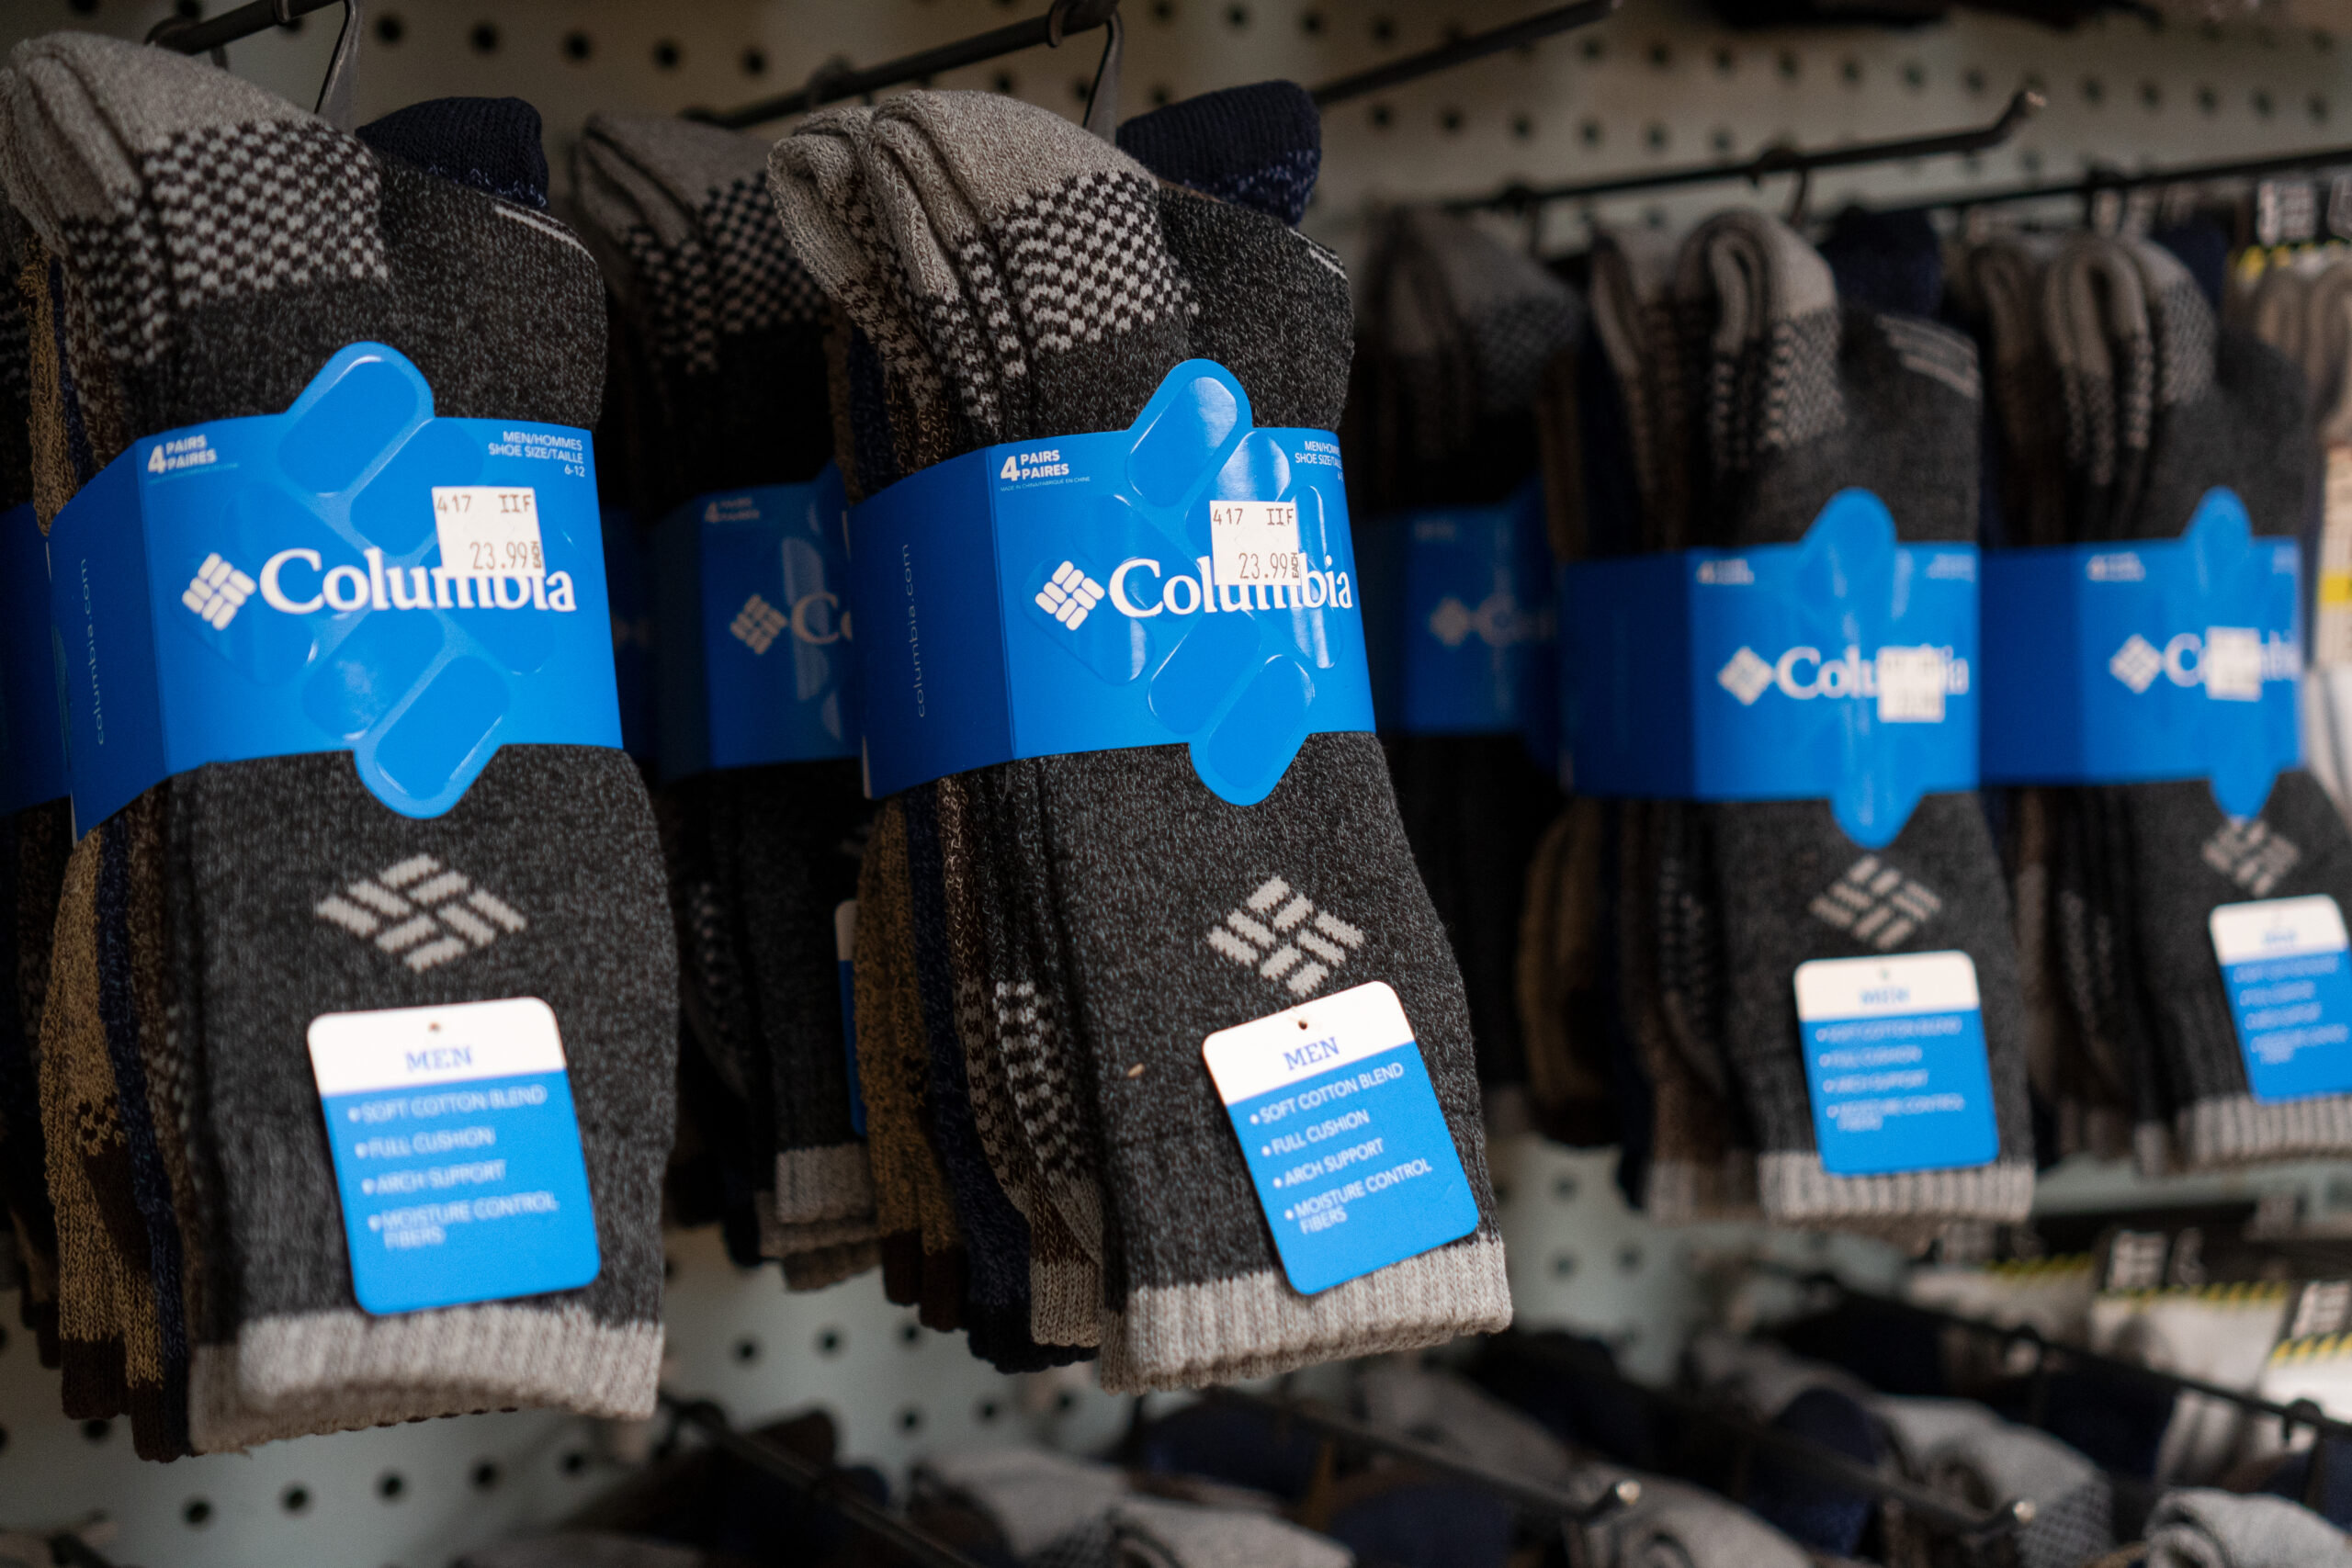 Columbia brand moisture wicking socks